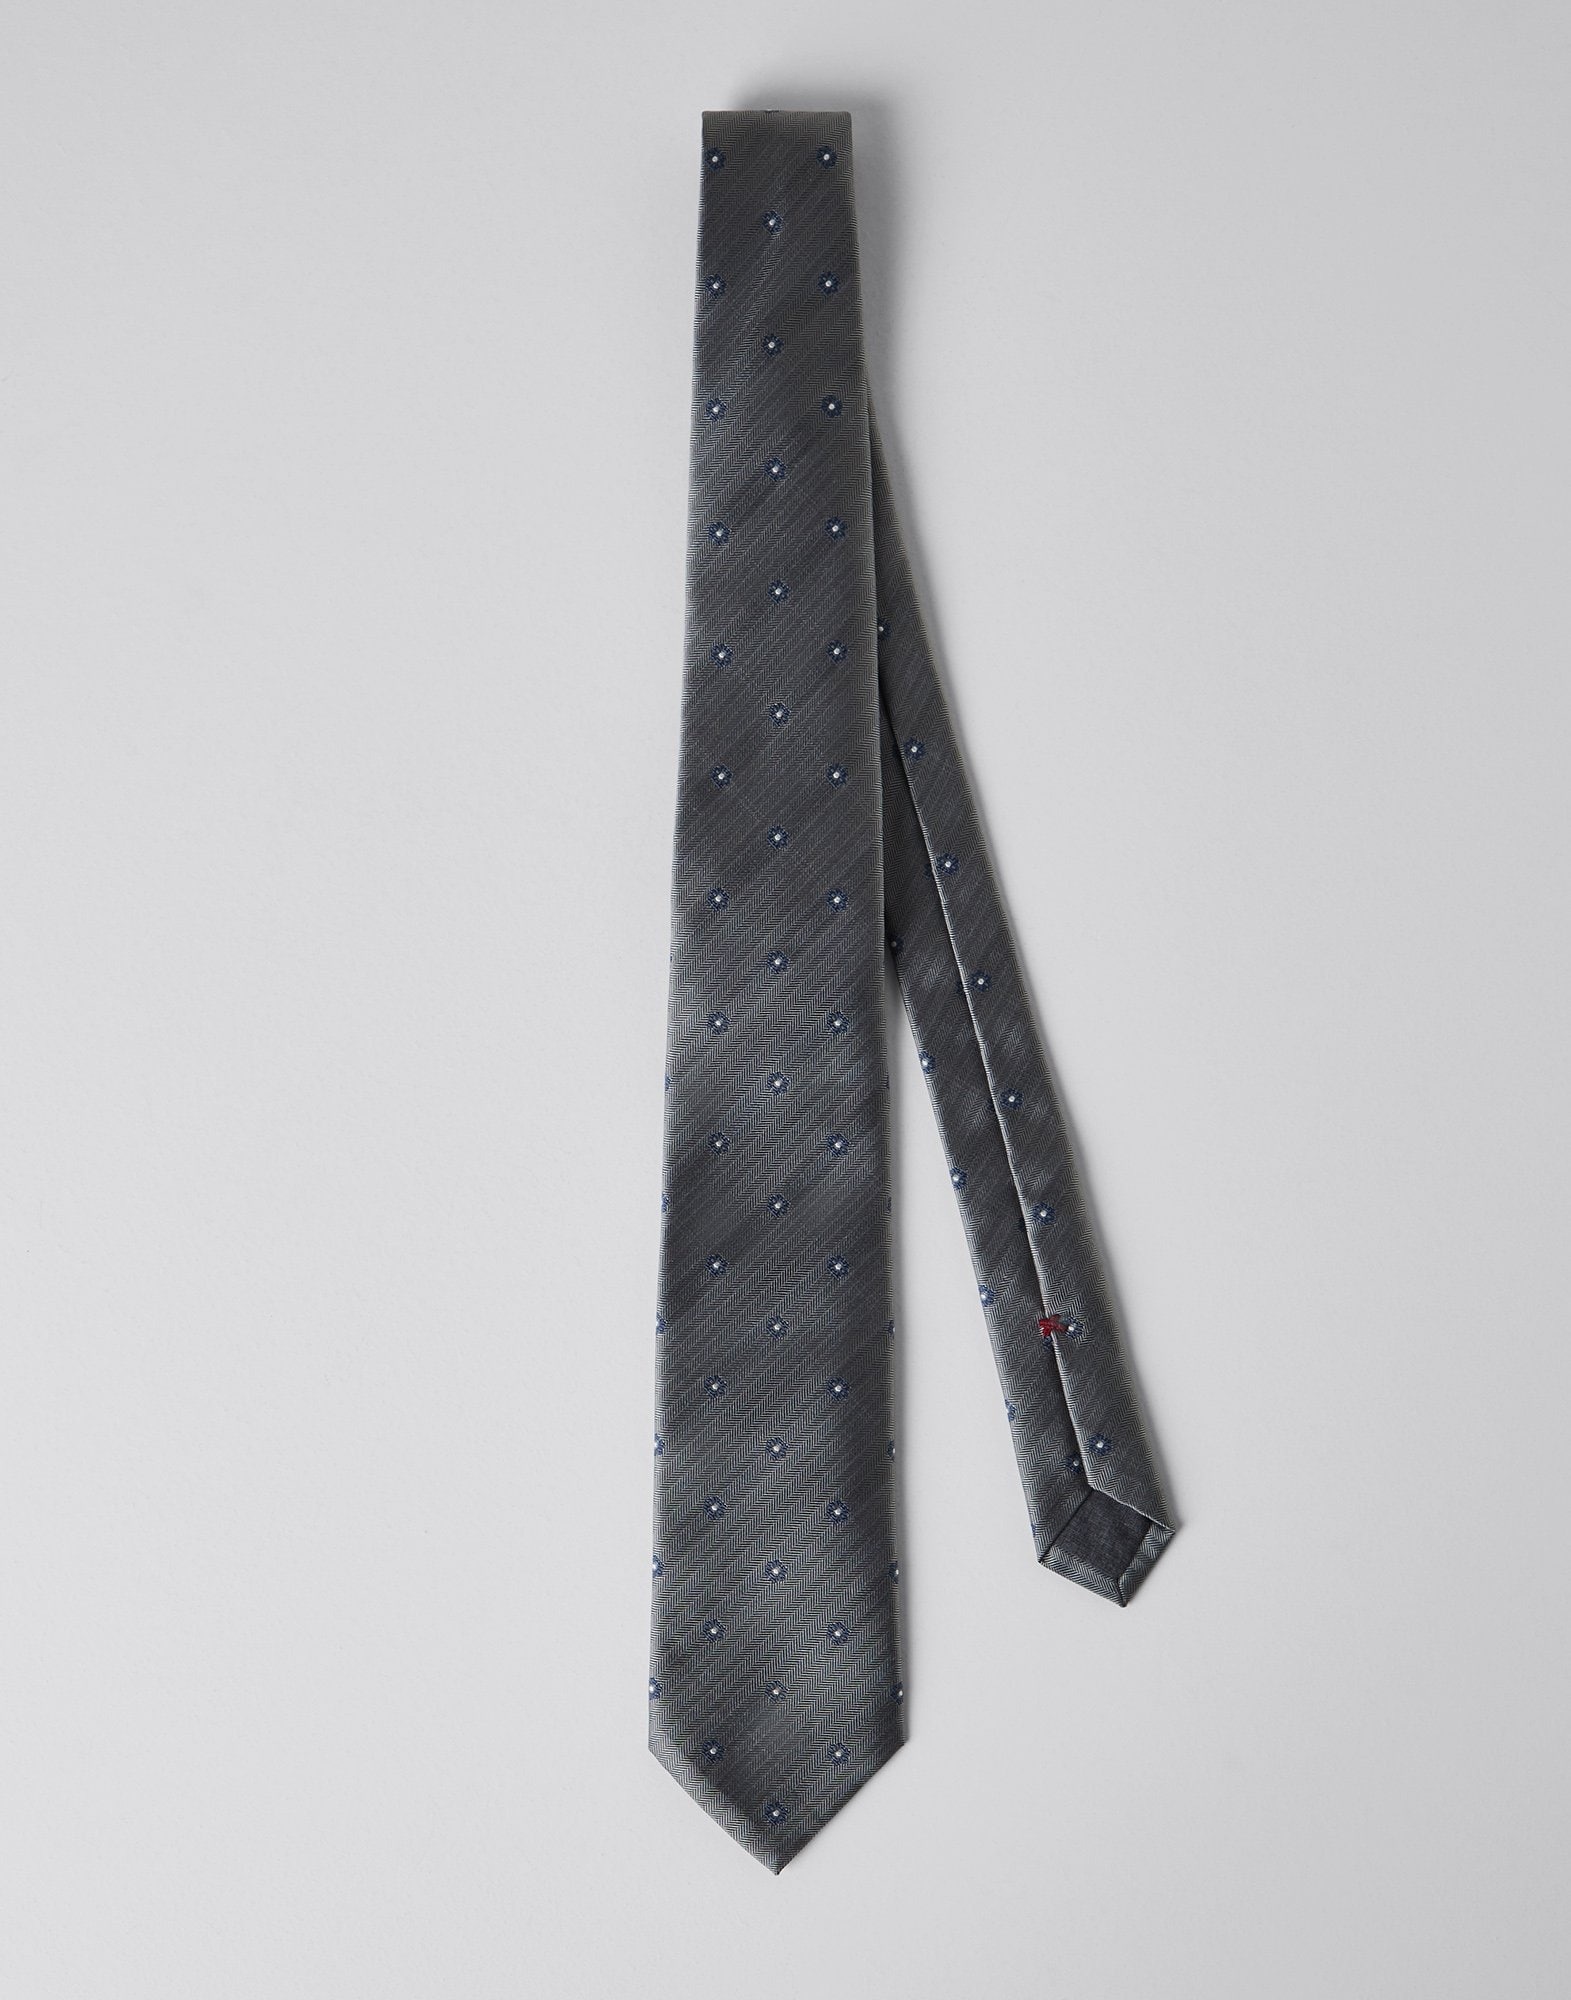 Silk chevron tie with flower embroidery - 1